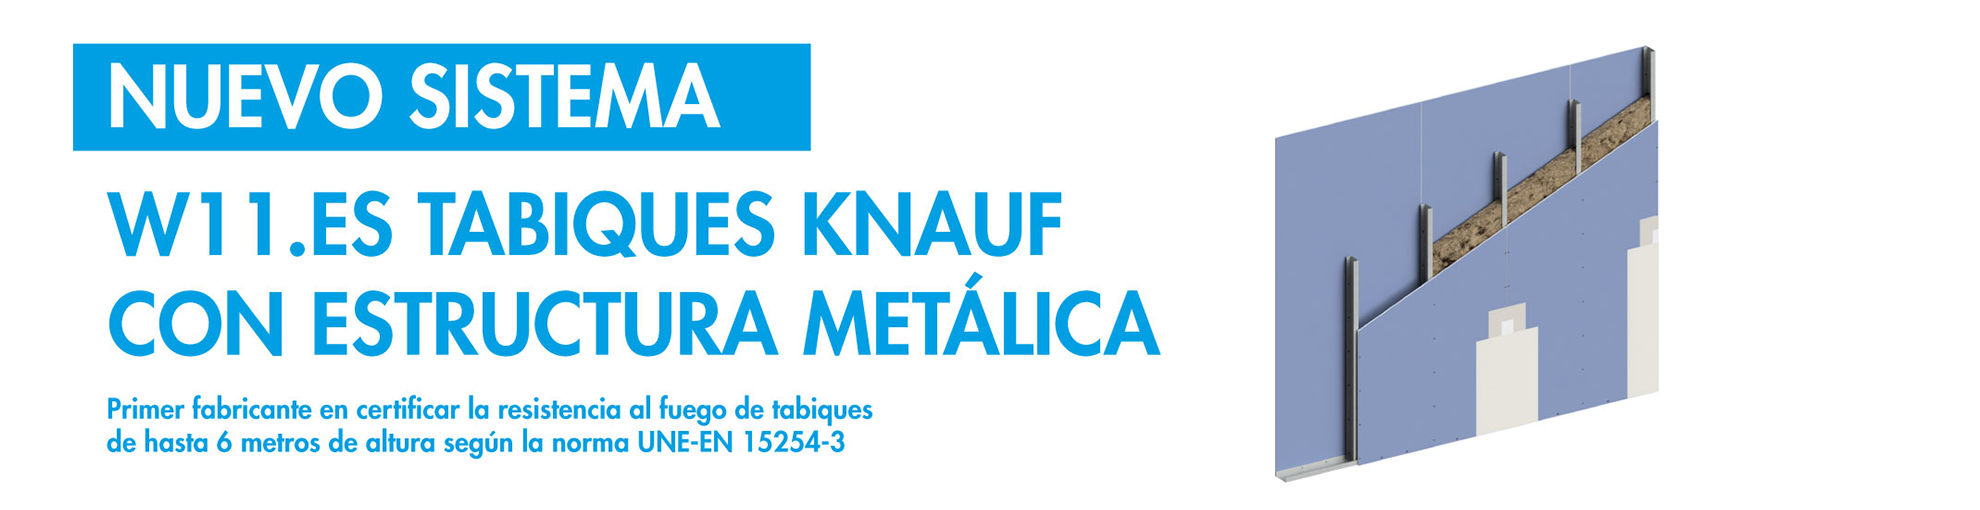 https://www.knauf.es/sites/default/files/revslider/image/tabiques-knauf-estructura-metalica.png